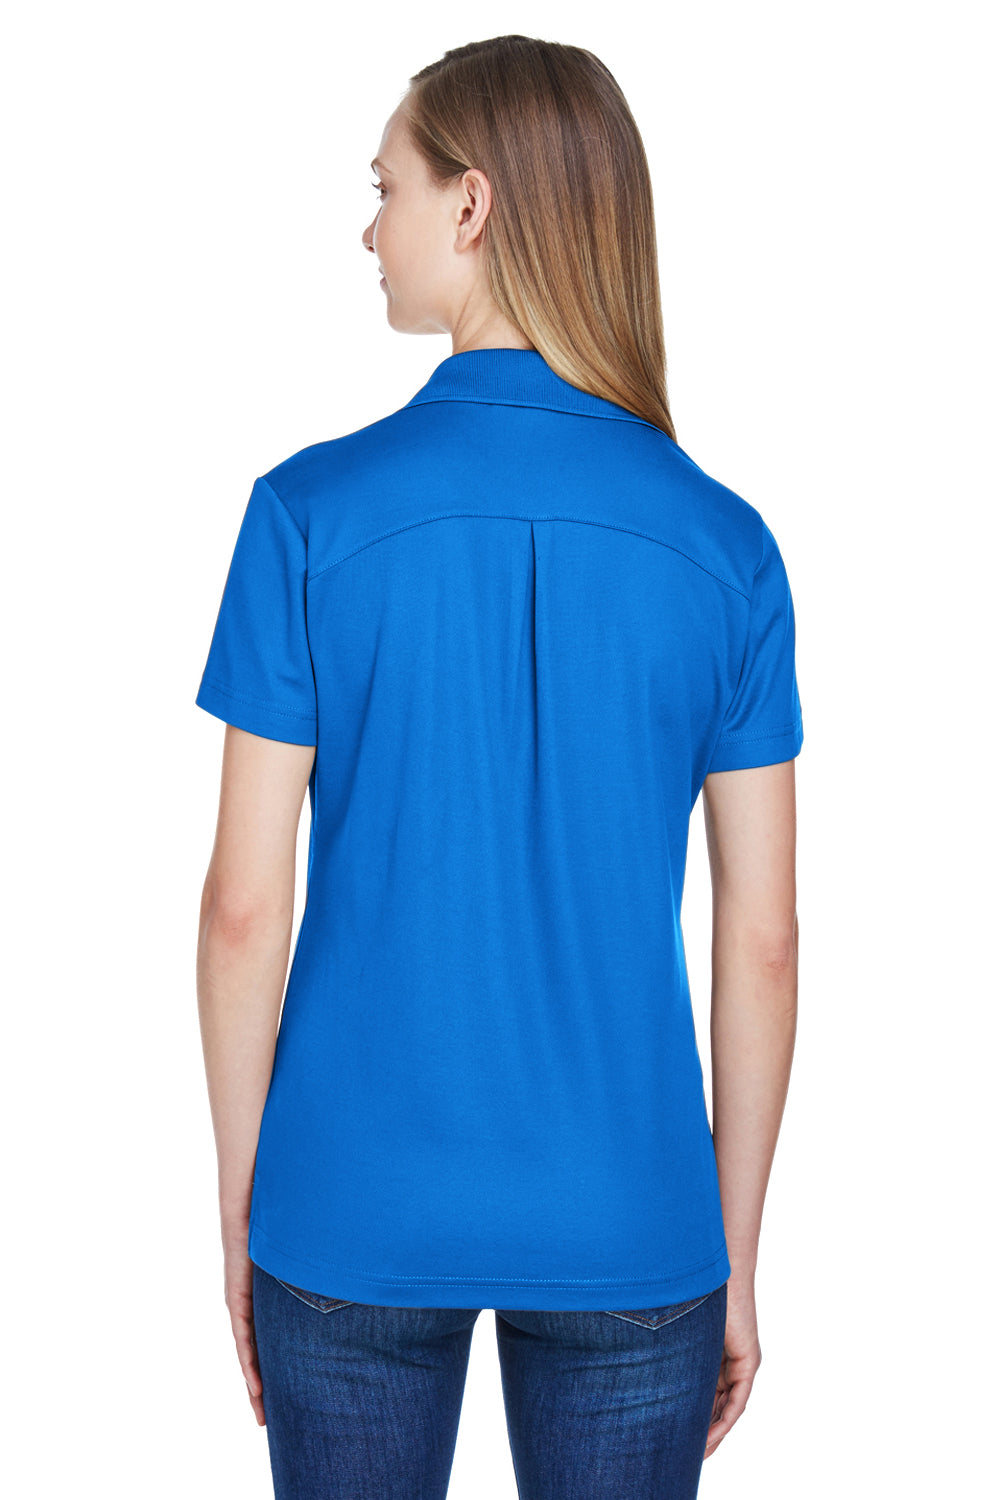 Devon & Jones DG20W Womens CrownLux Performance Moisture Wicking Short Sleeve Polo Shirt French Blue Back